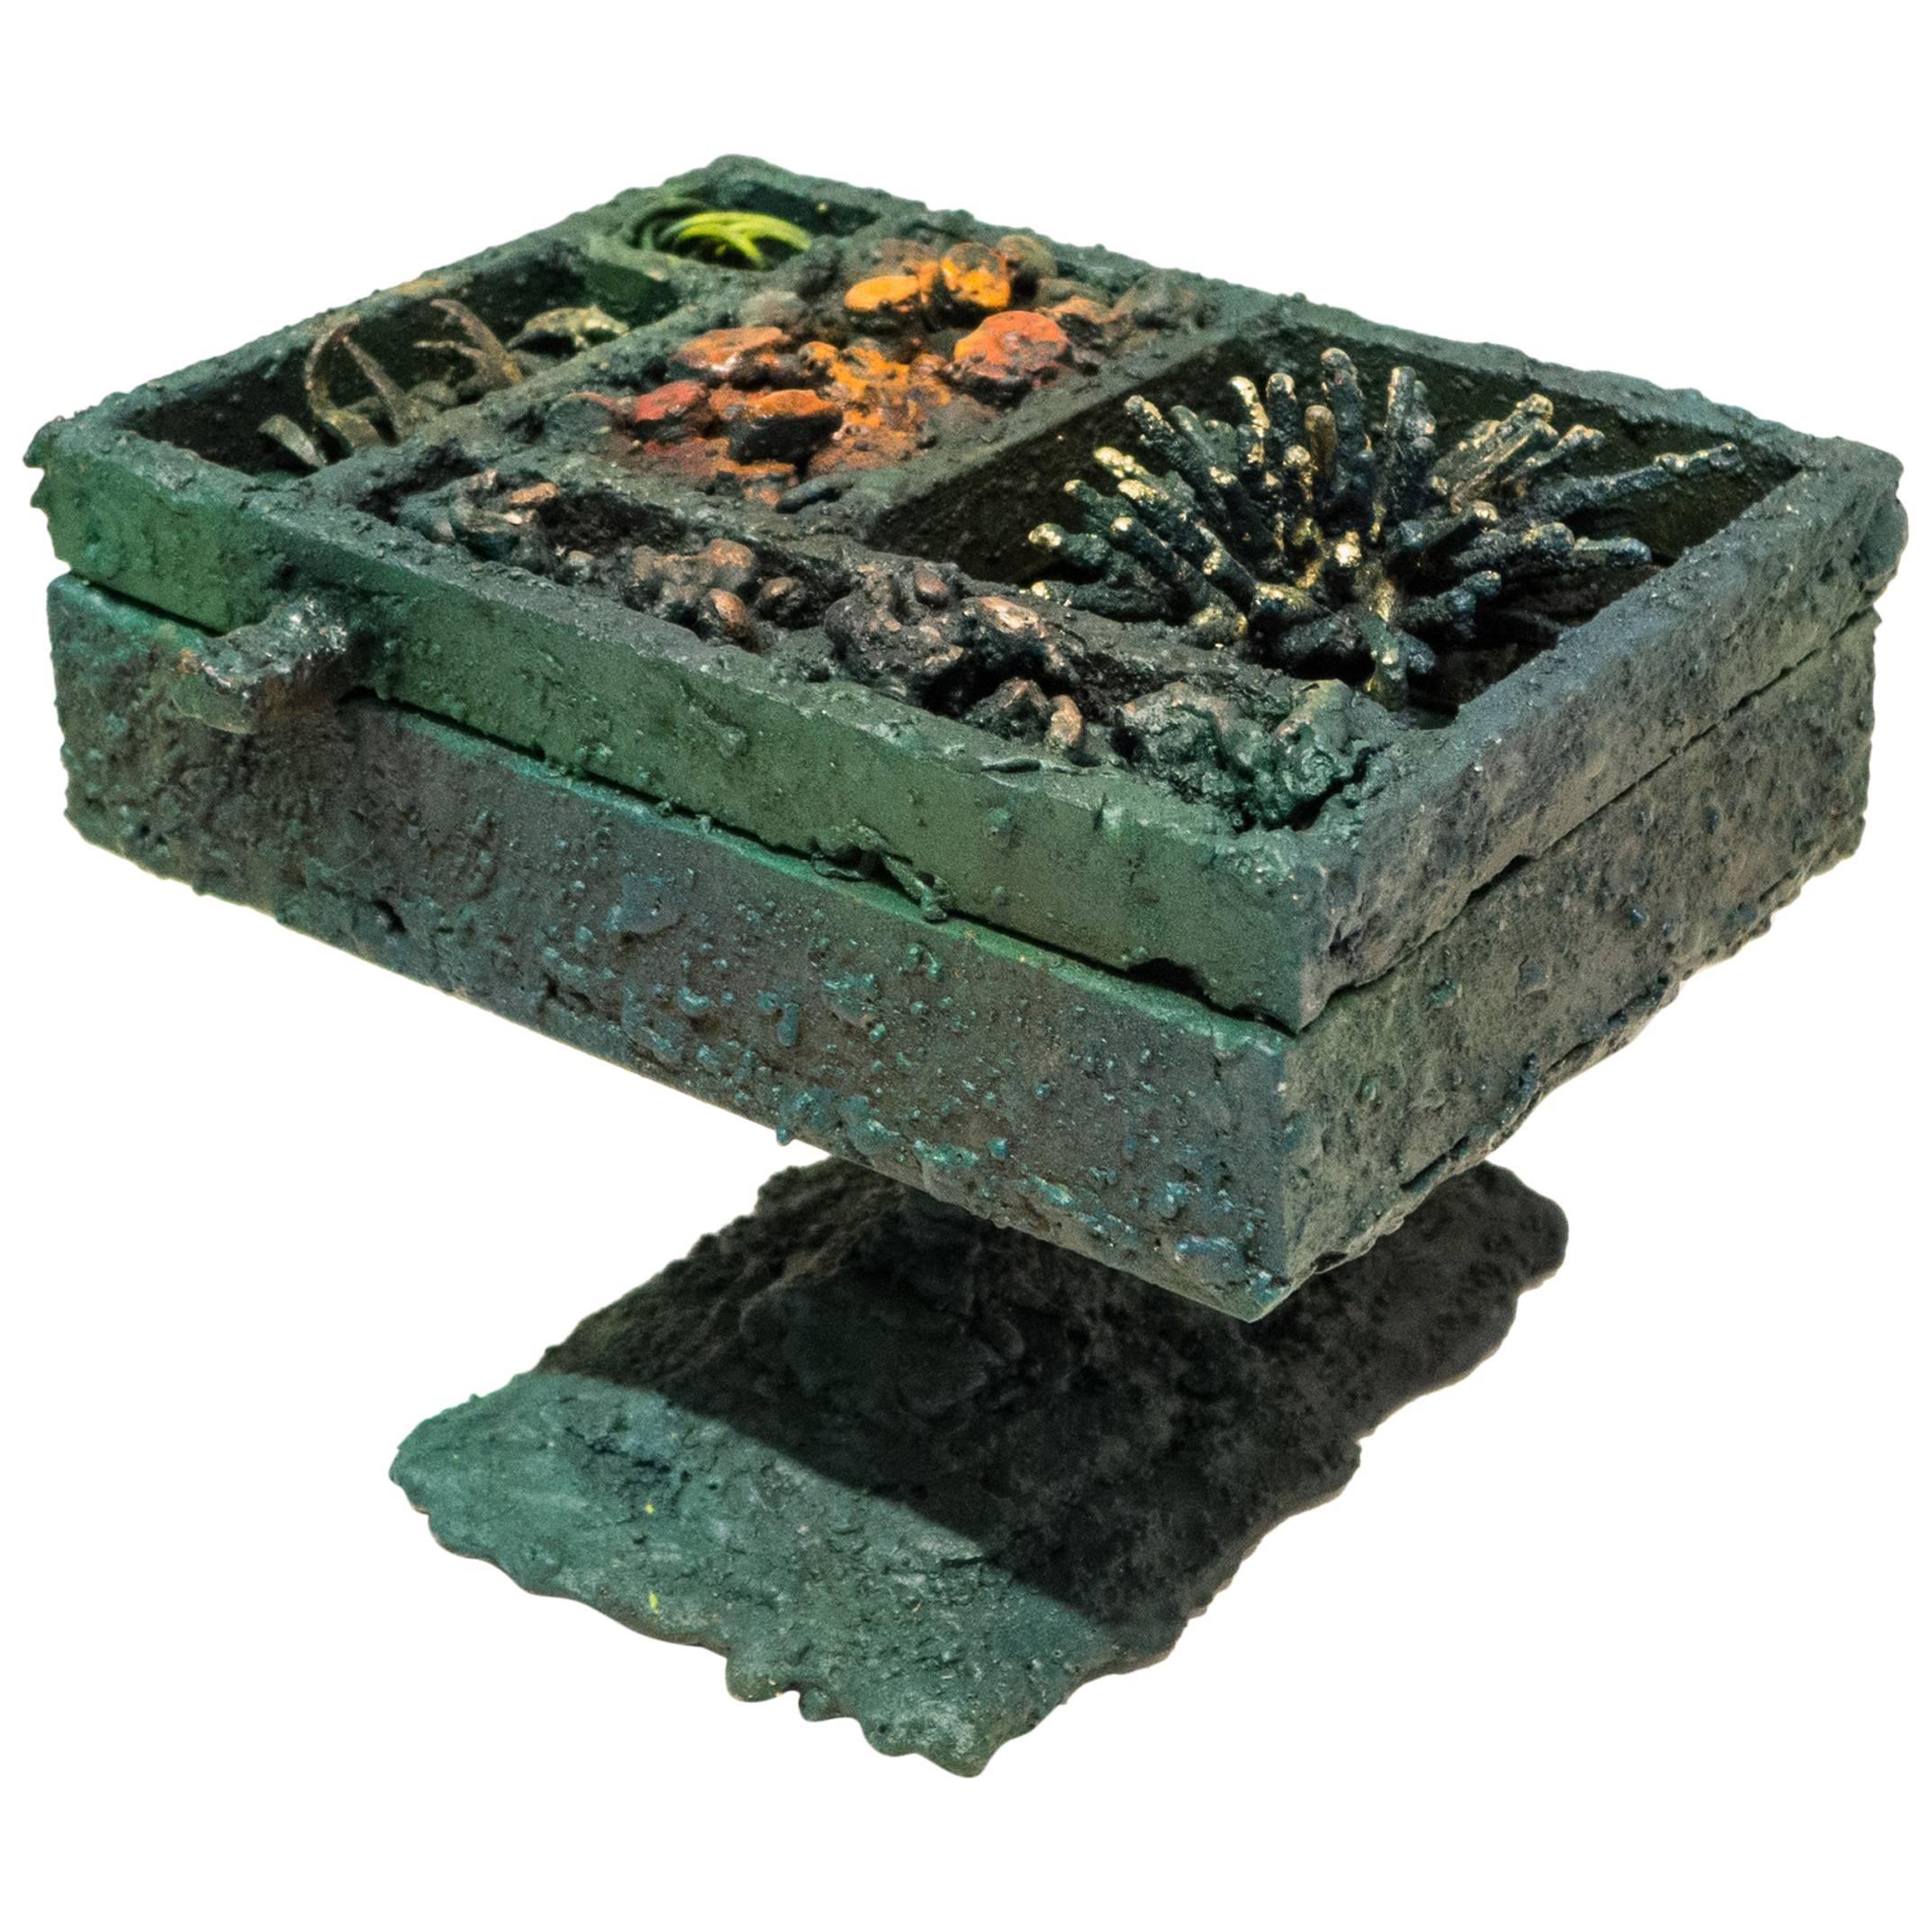 James Bearden "Segment Jewelry Box on Pedestal"